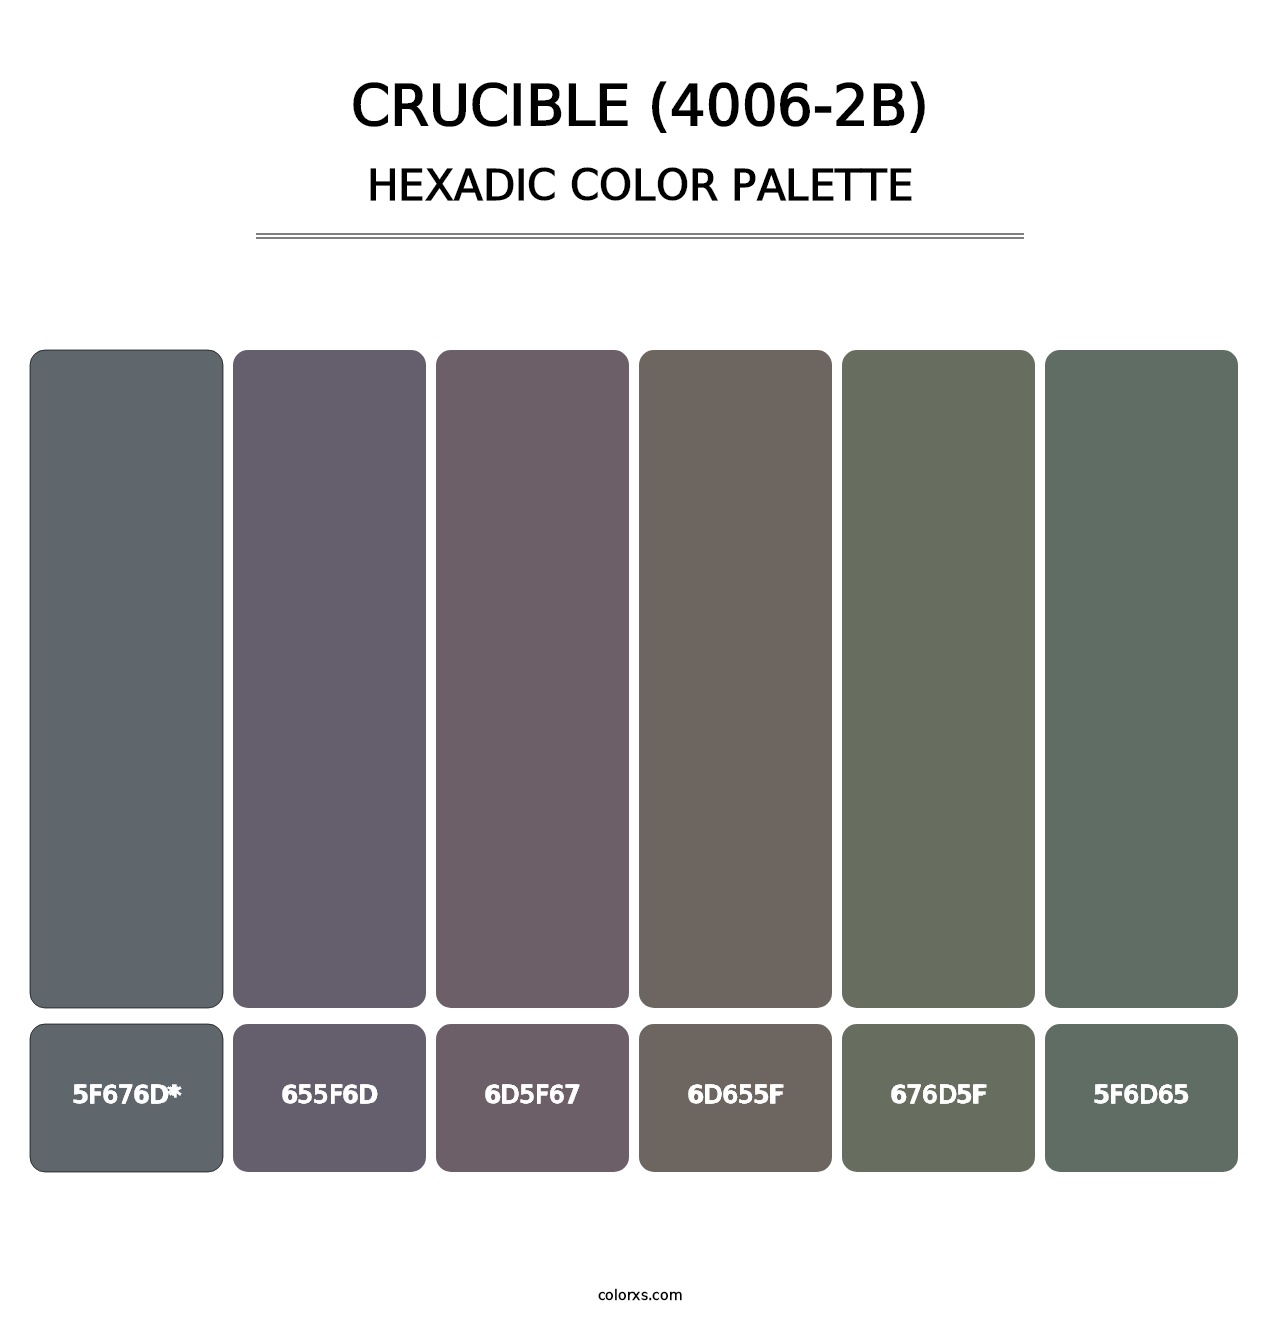 Crucible (4006-2B) - Hexadic Color Palette